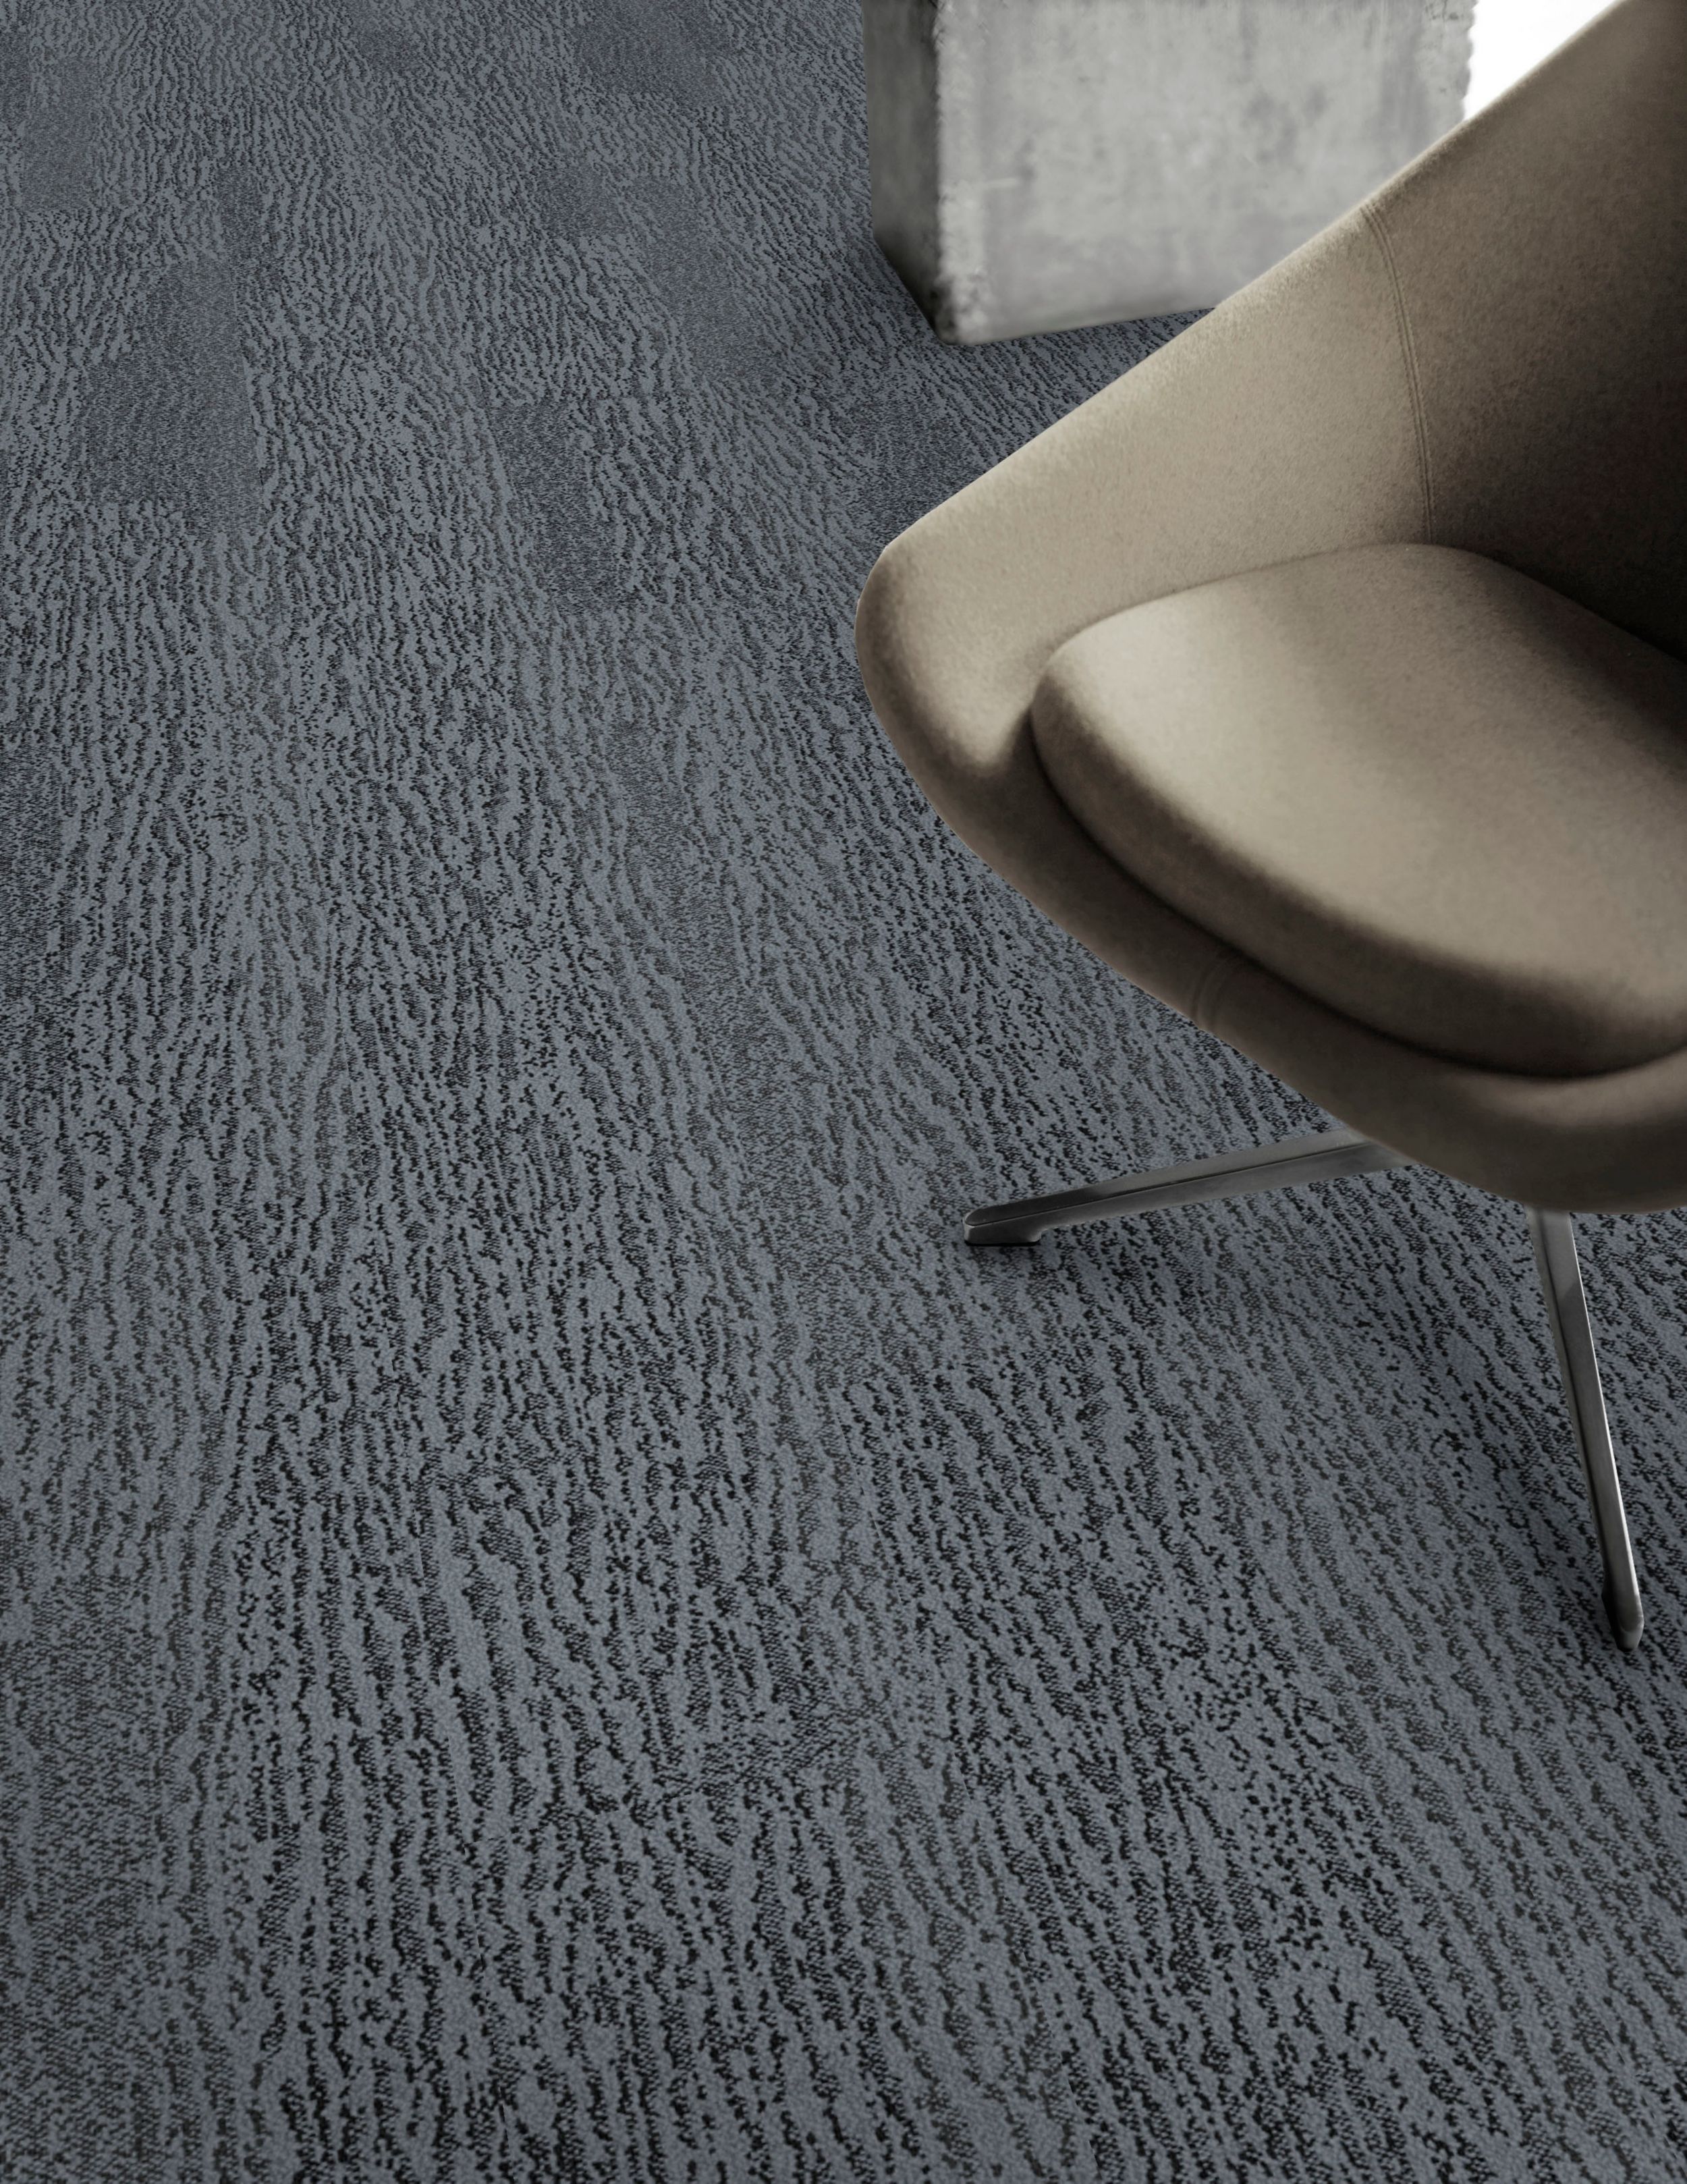 Detail of Interface Velvet Bark carpet tile with chair image number 3